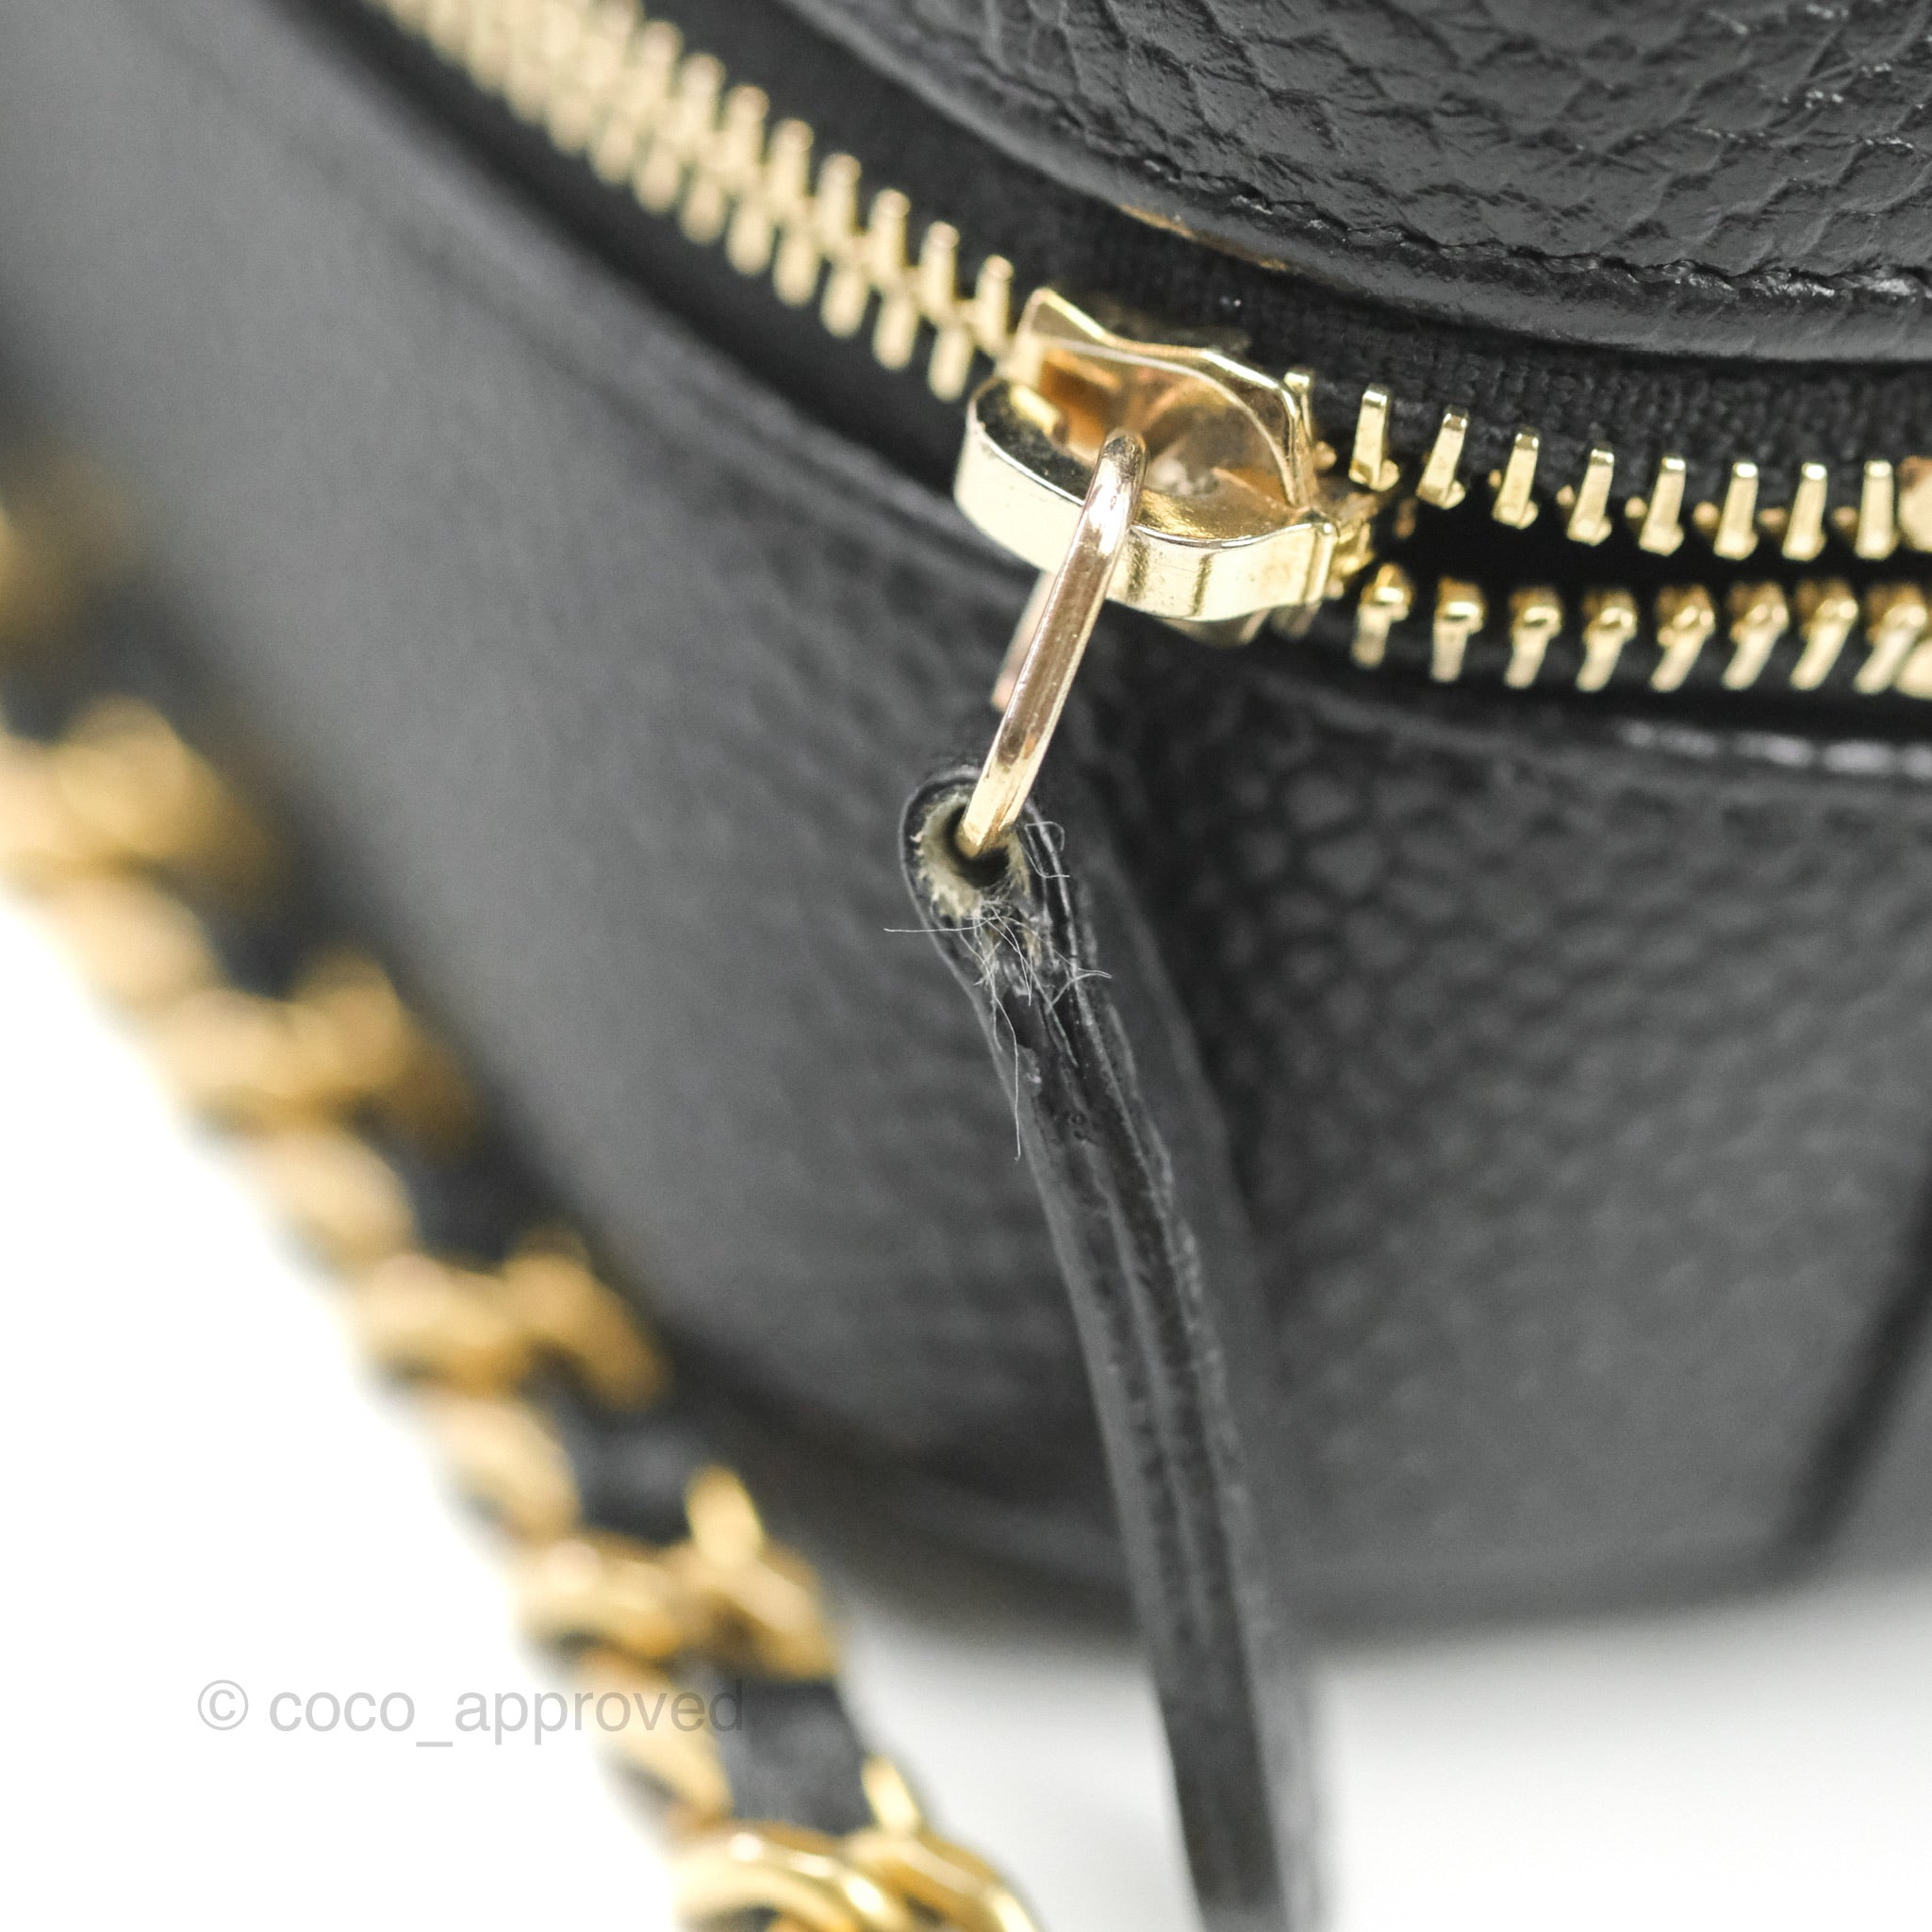 Black Quilted Goatskin Small CC Filigree Chain Around Vanity Case Gold  Hardware, 2019